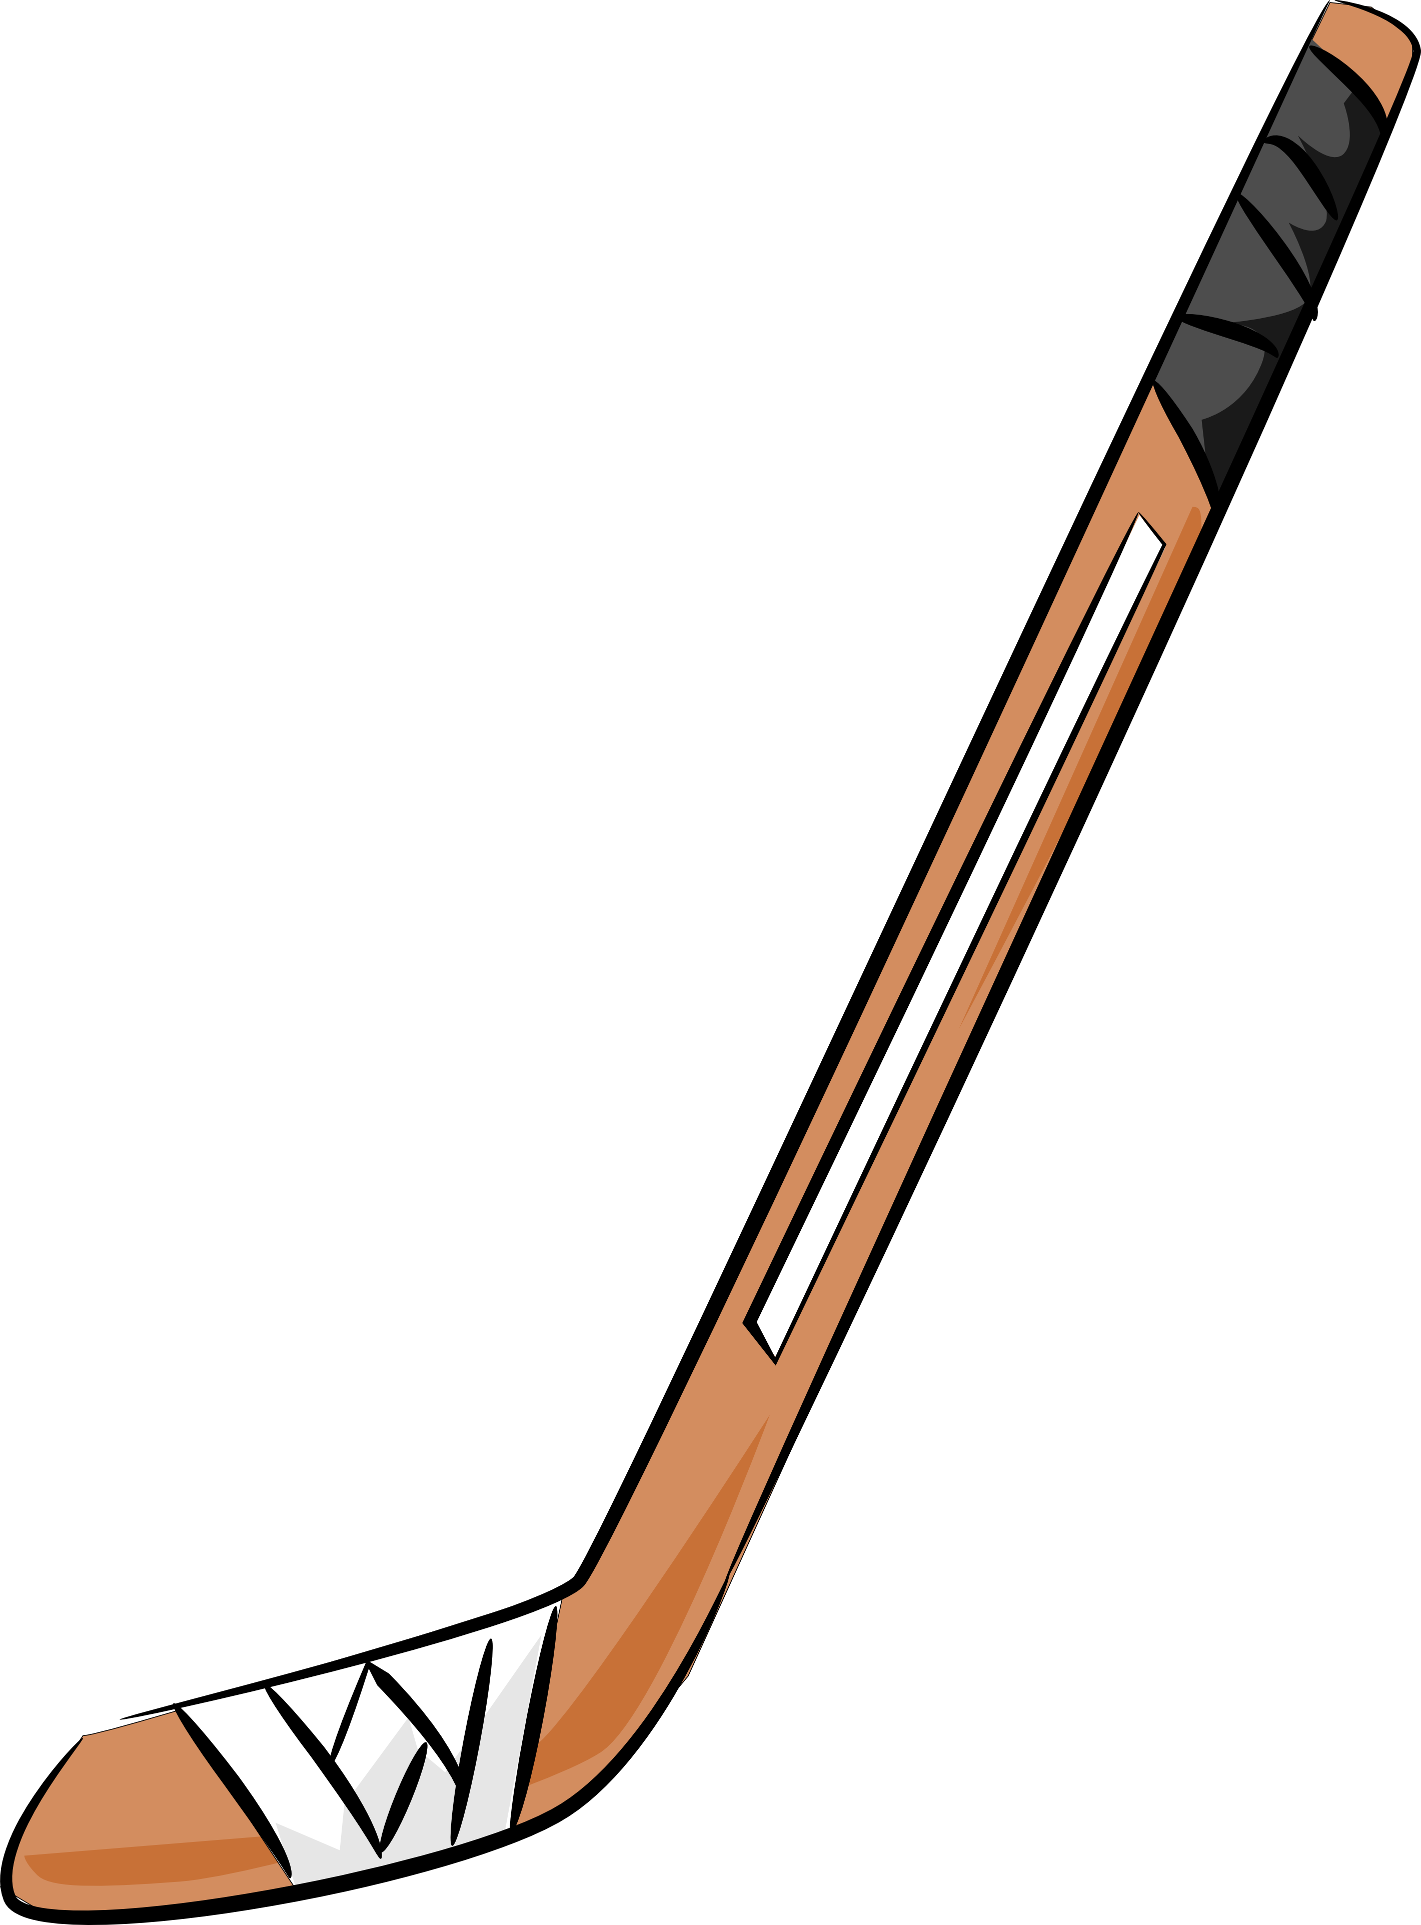 The Totally Free Clip Art Blog: Sports - Hockey stick